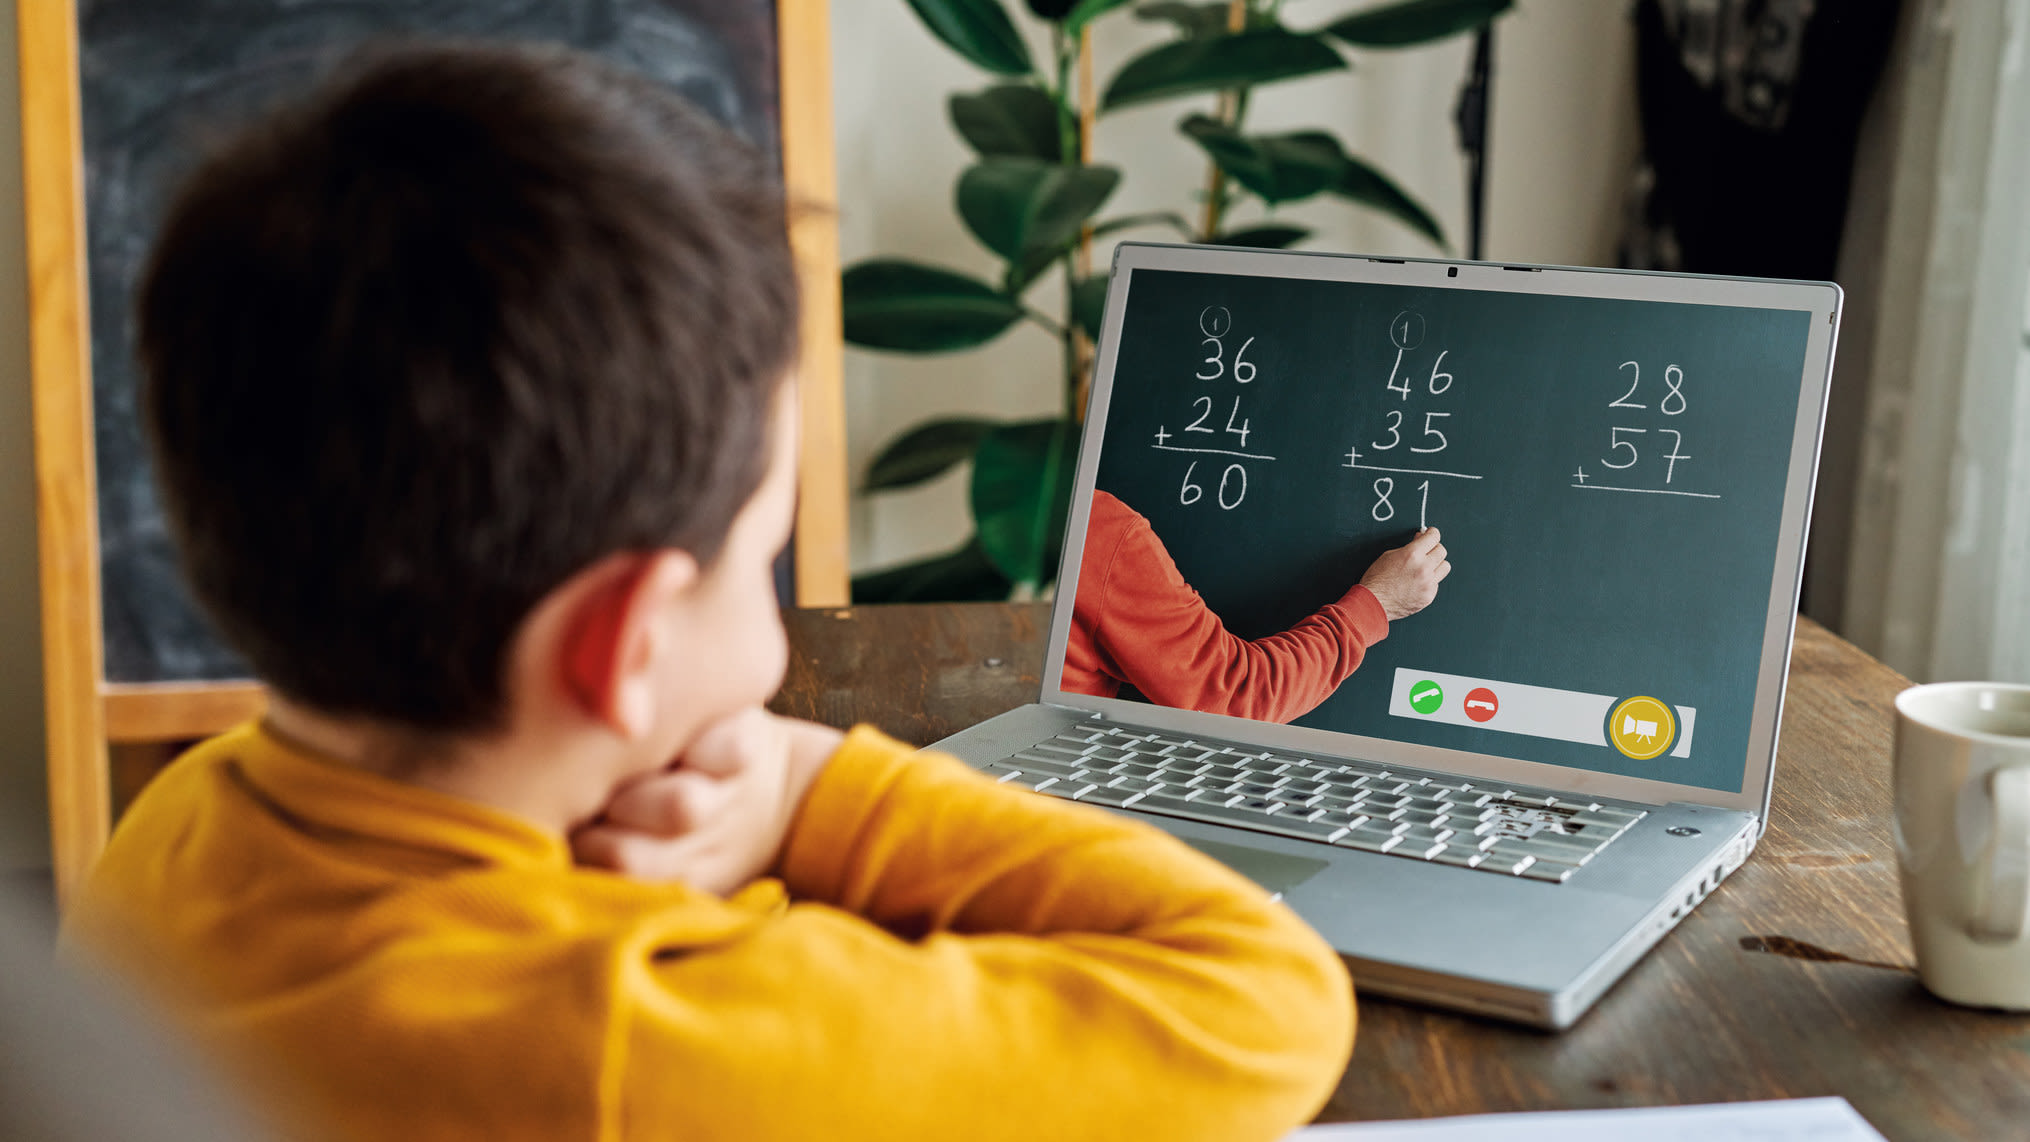 Kind, Laptop, Unterricht, Homeschool
Urheberrecht: Getty Images / Pinstock